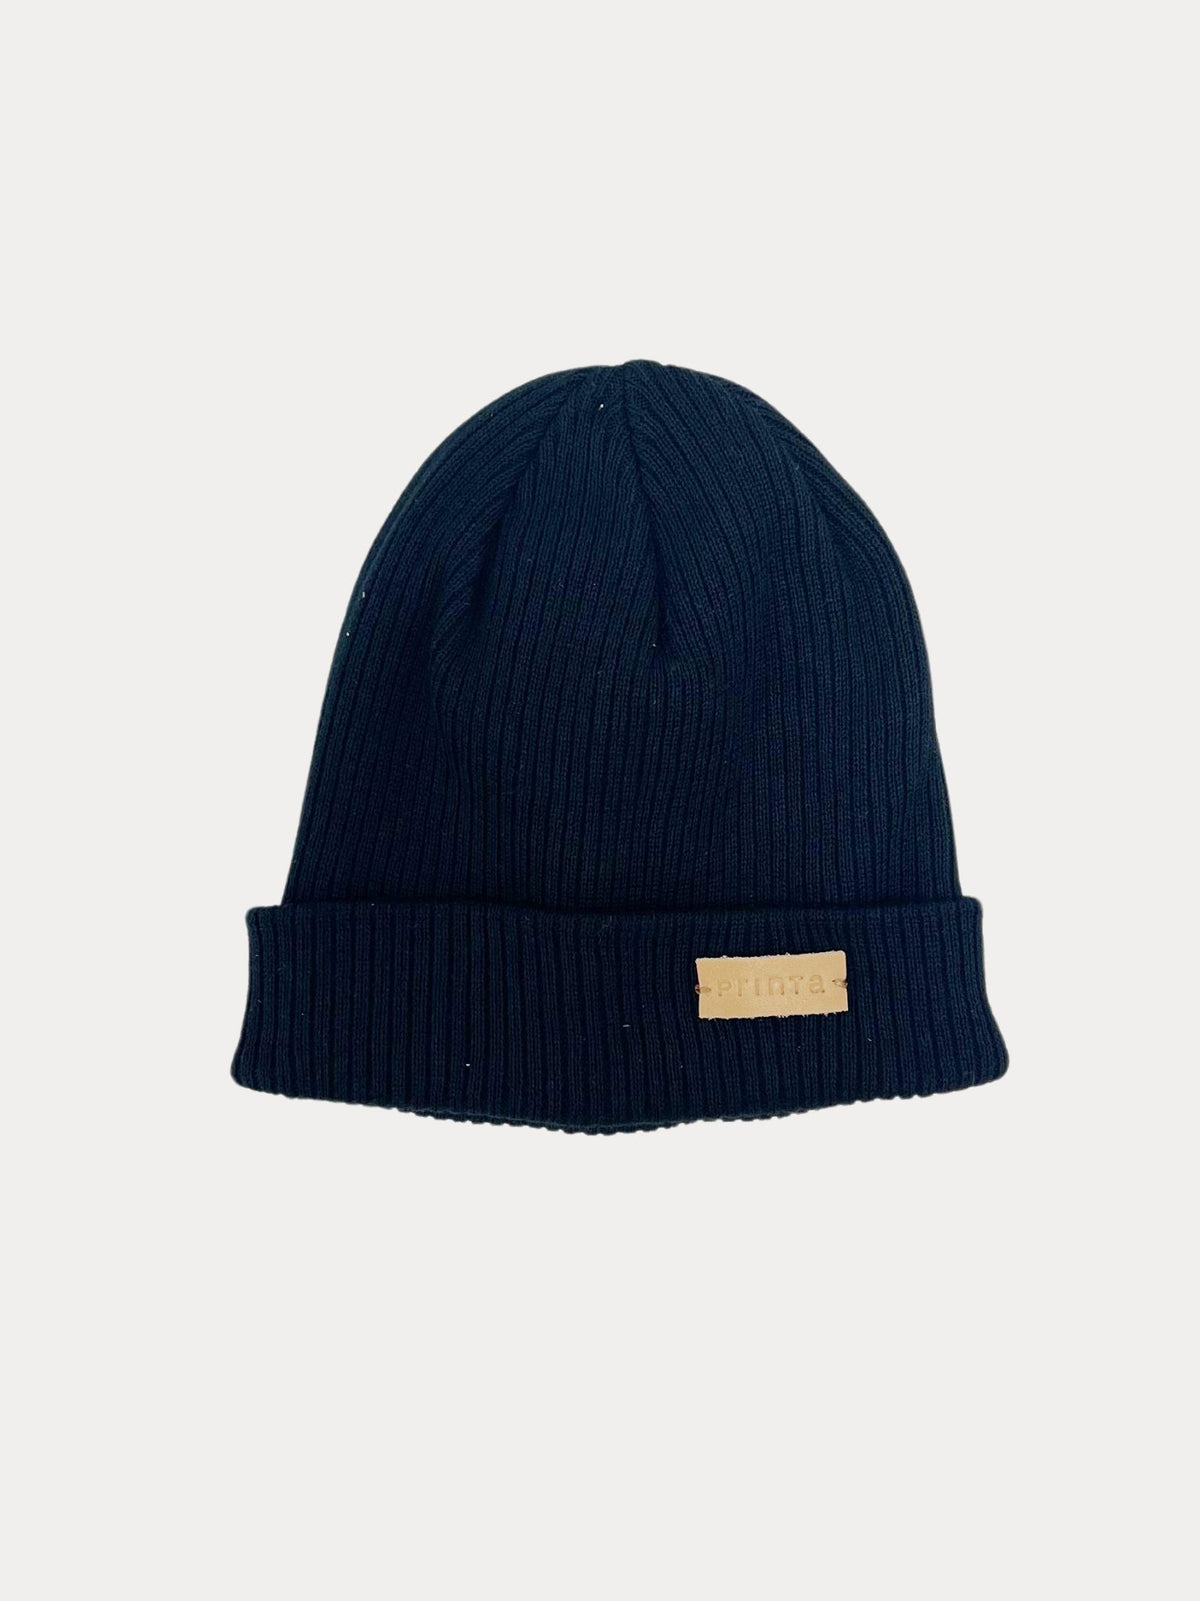 "Printa" black knitted cap